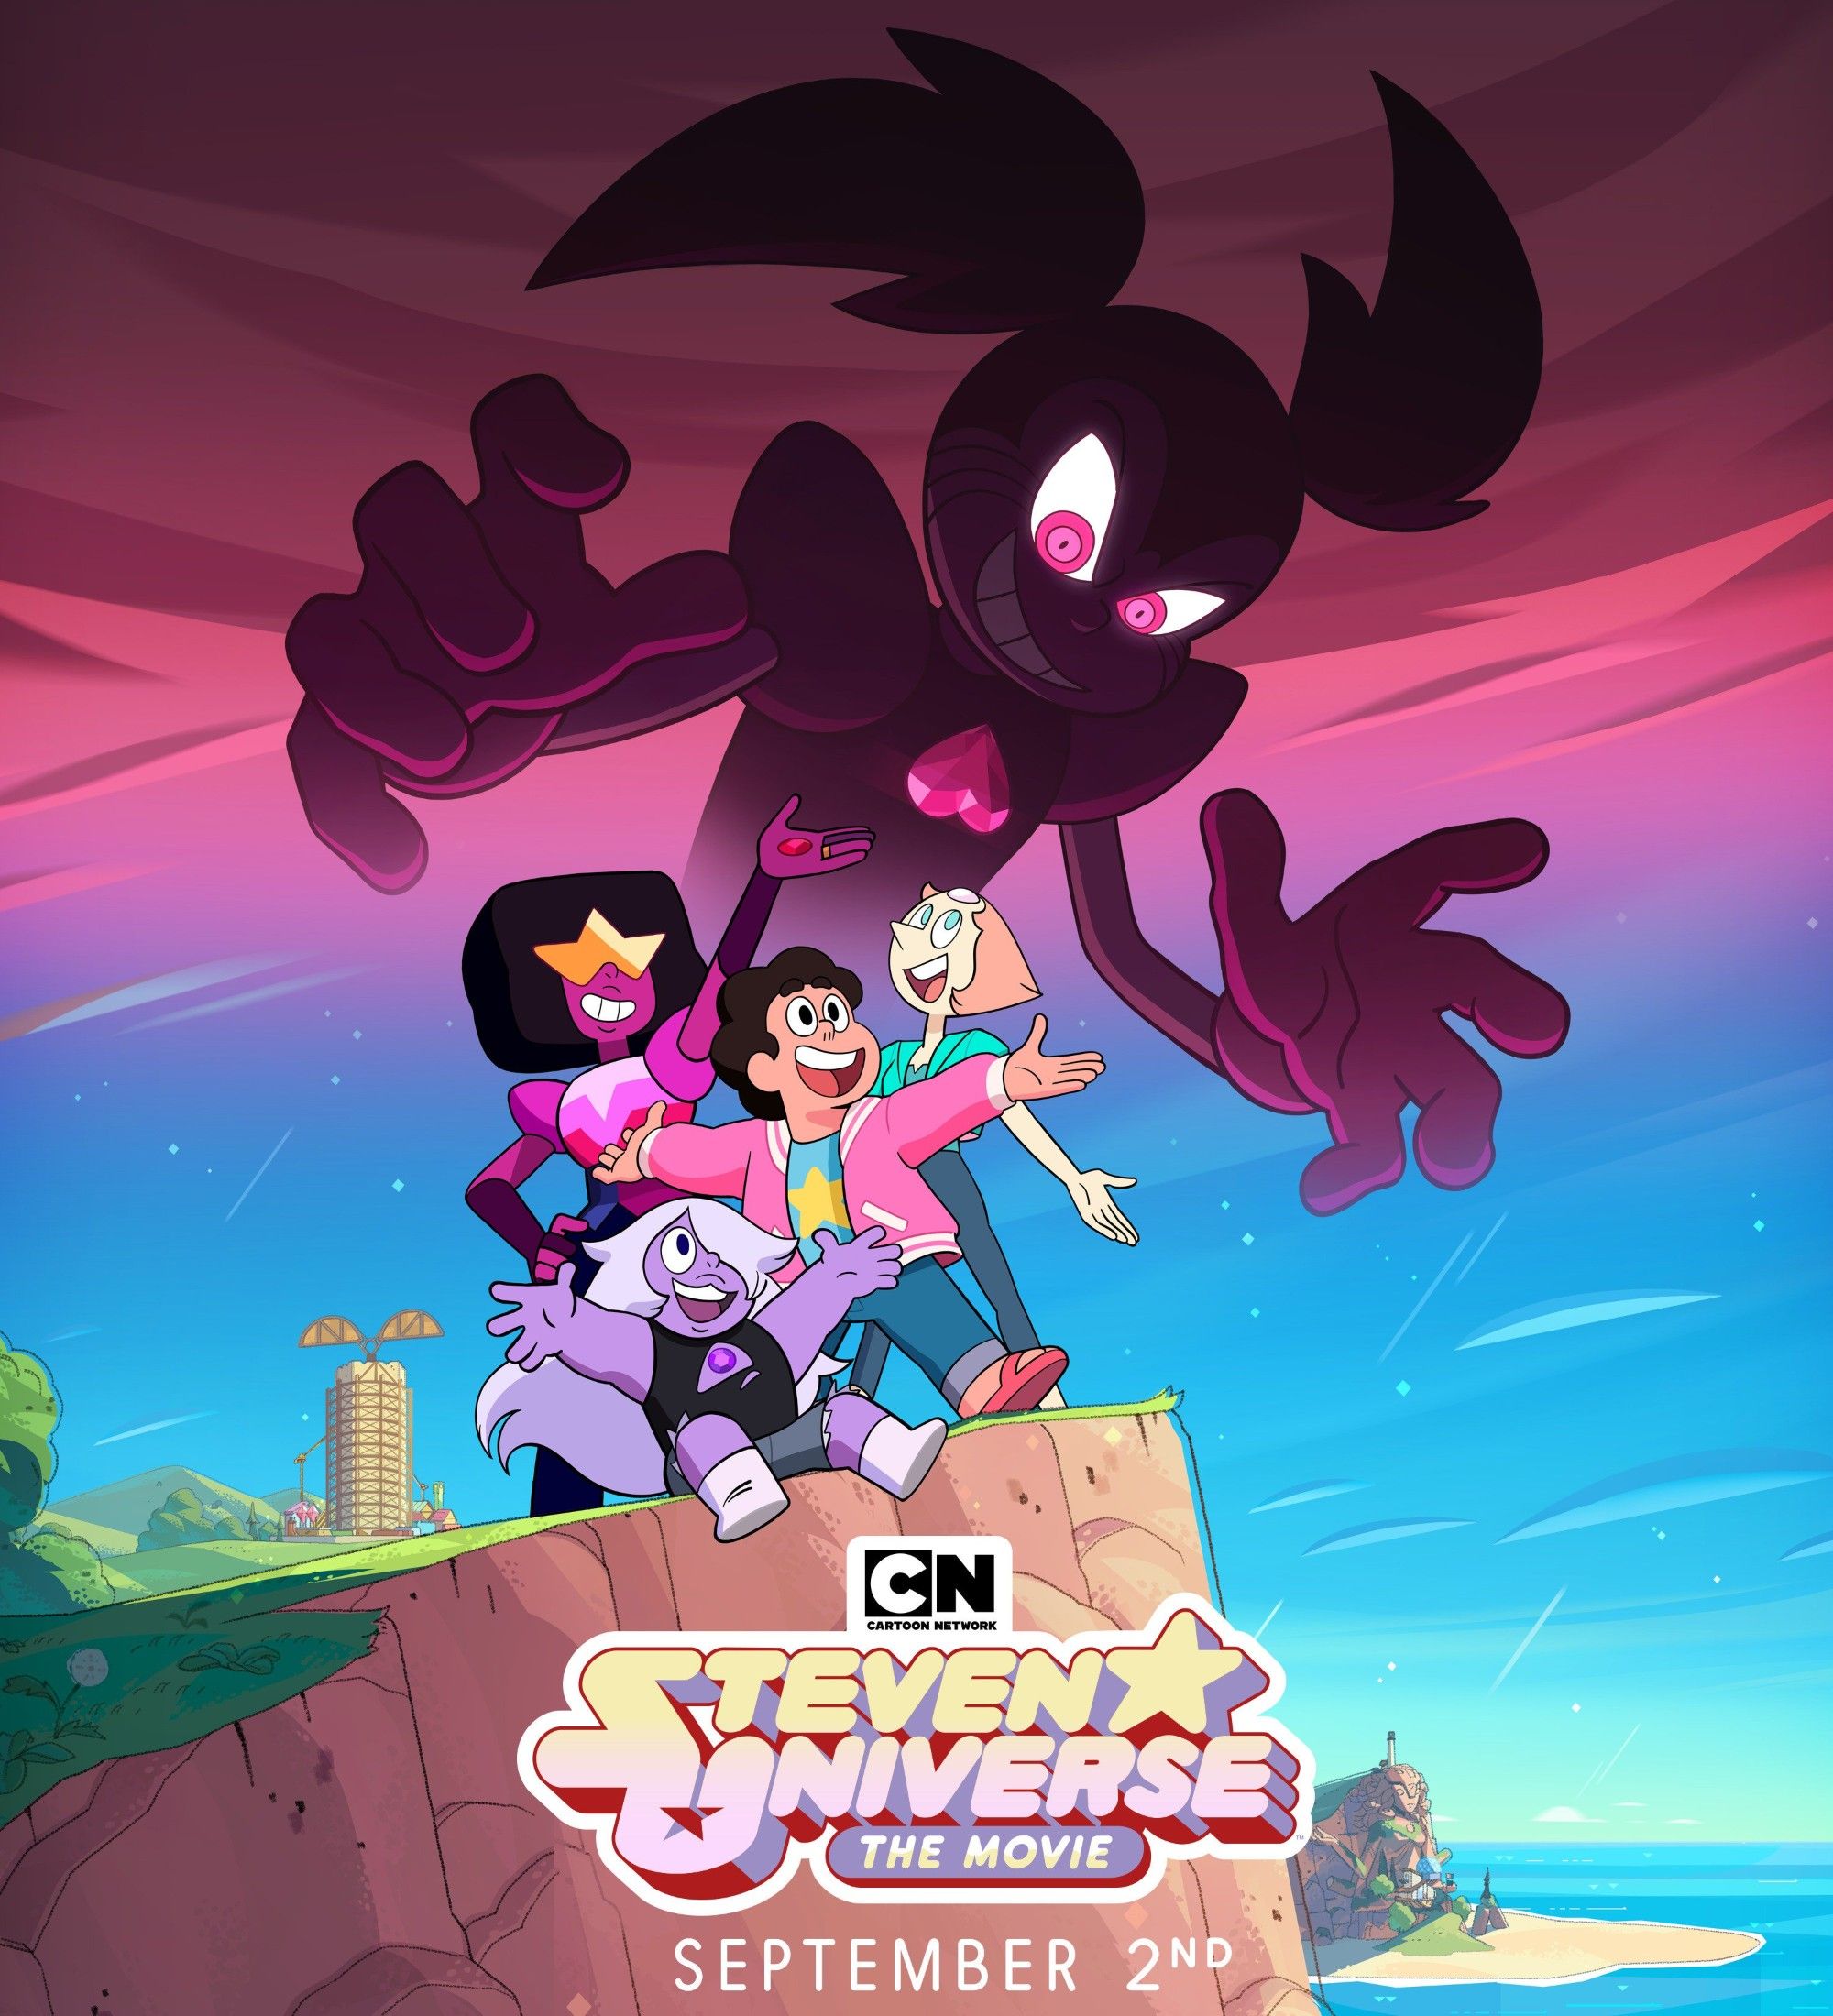 Steven Universe The Movie poster premiere date